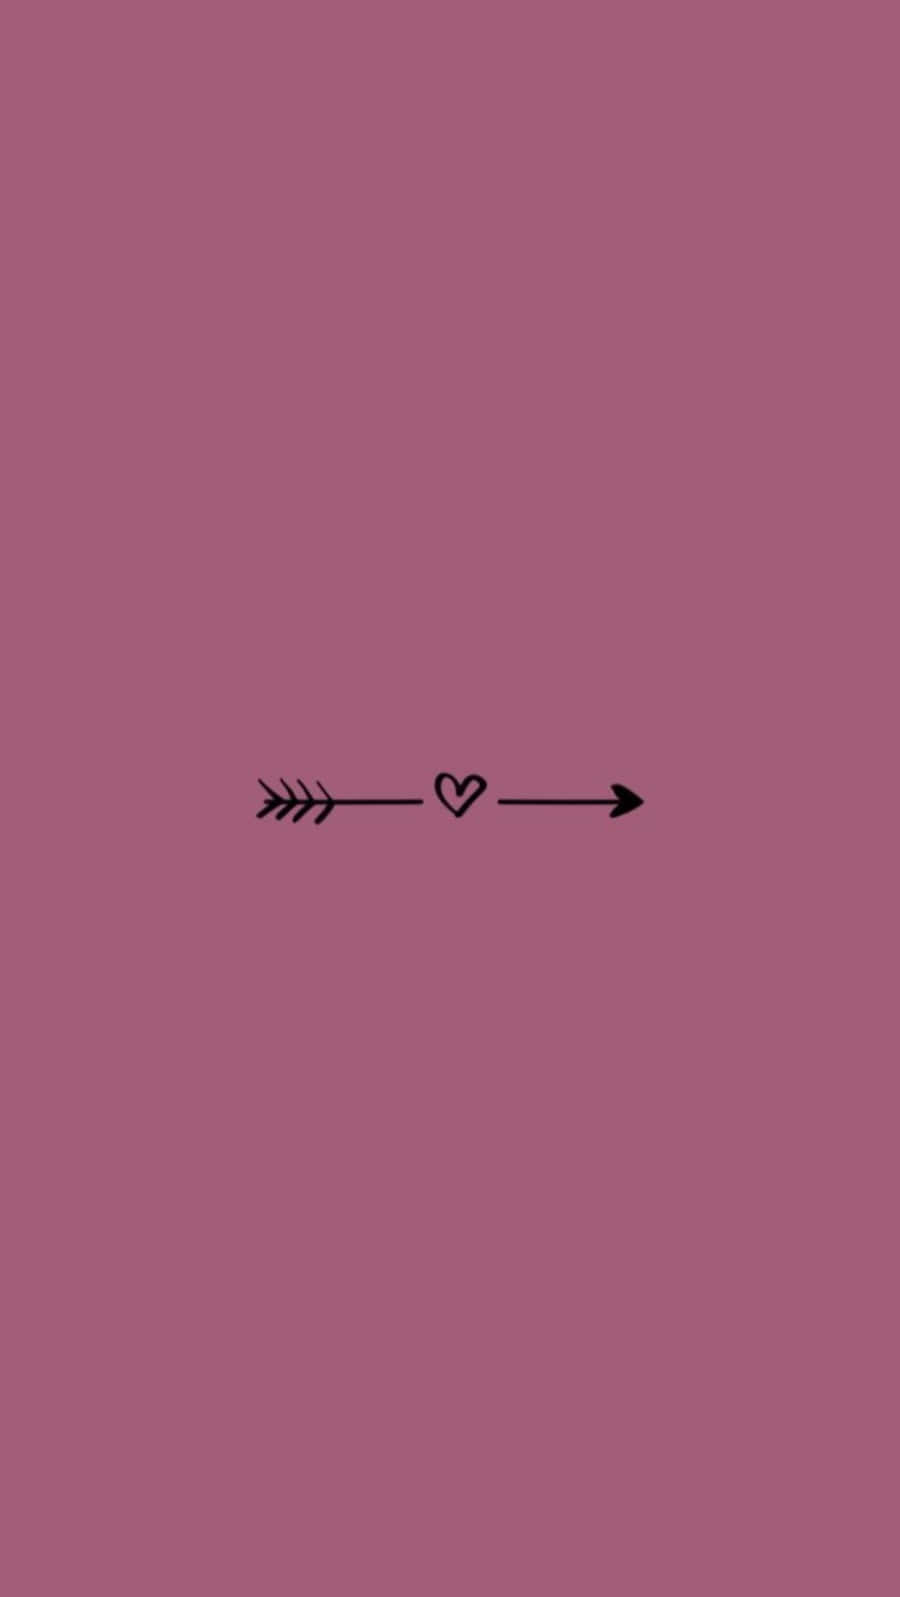 Corazóny Flecha Femeninos De Tumblr En Negro Fondo de pantalla